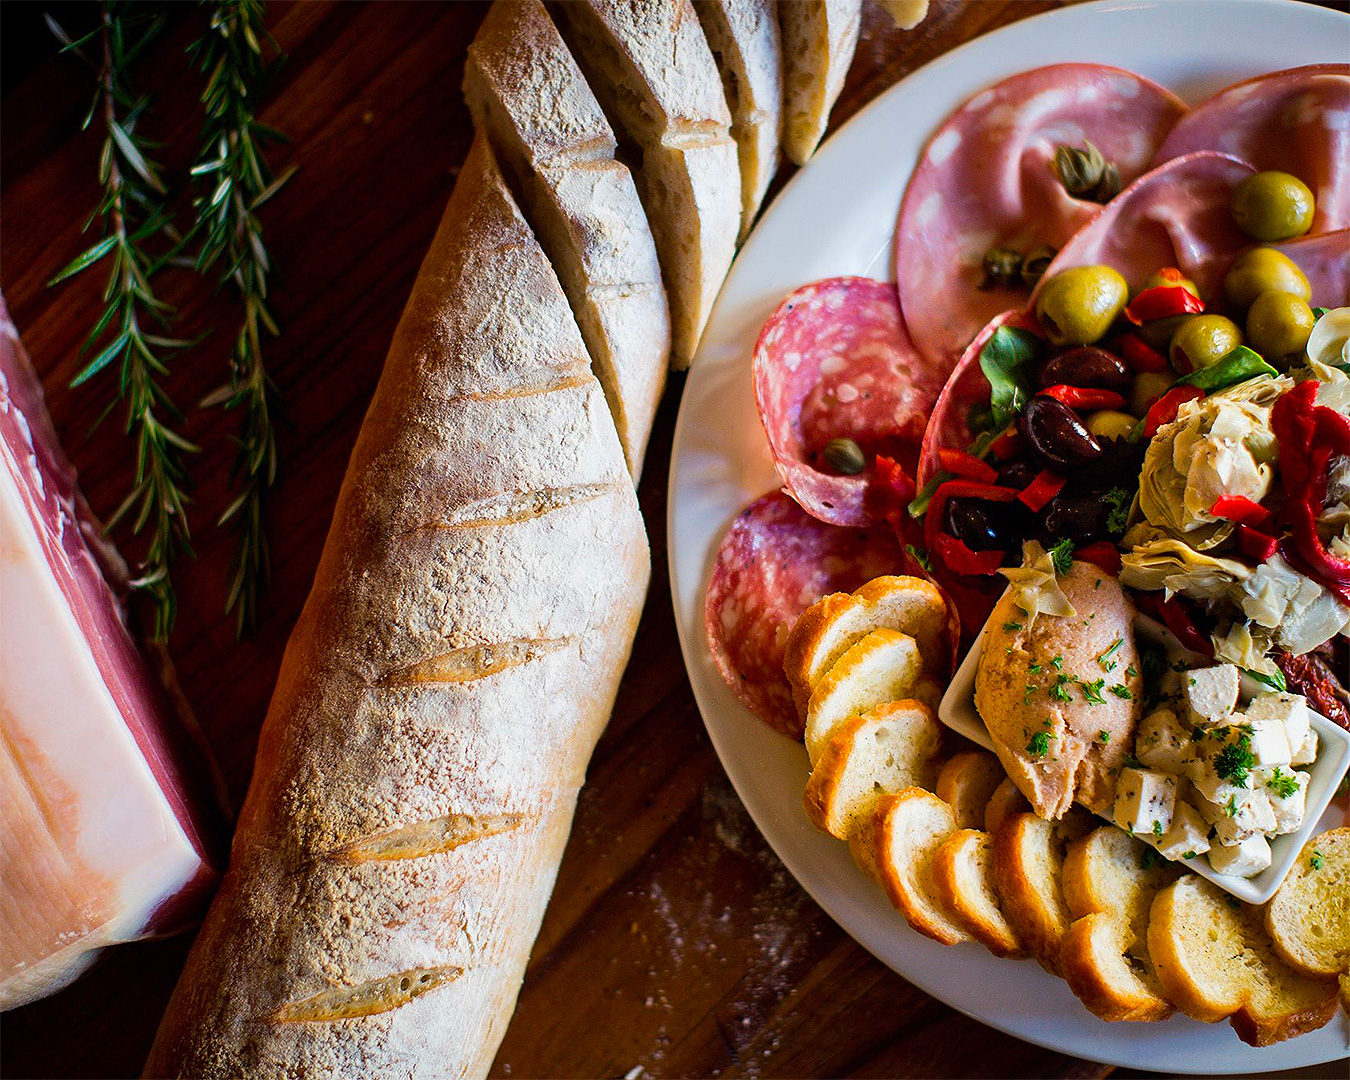 An excellent looking platter at Etrusco, one of the best restaurants in Dunedin.